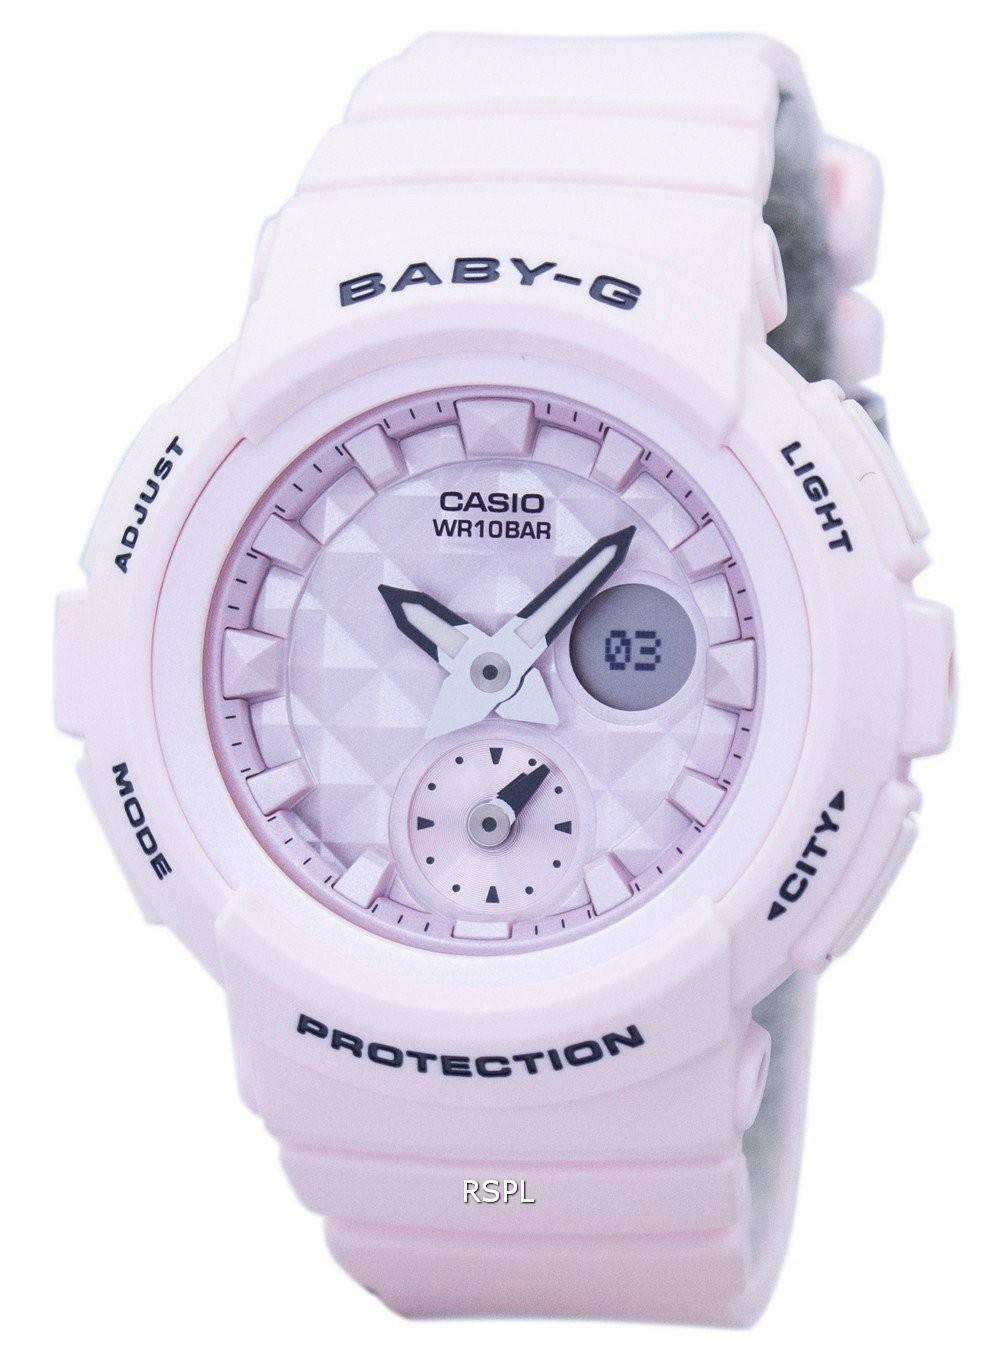 Casio Baby-G Shock Resistant World Time Analog Digital BGA-190BE-4A